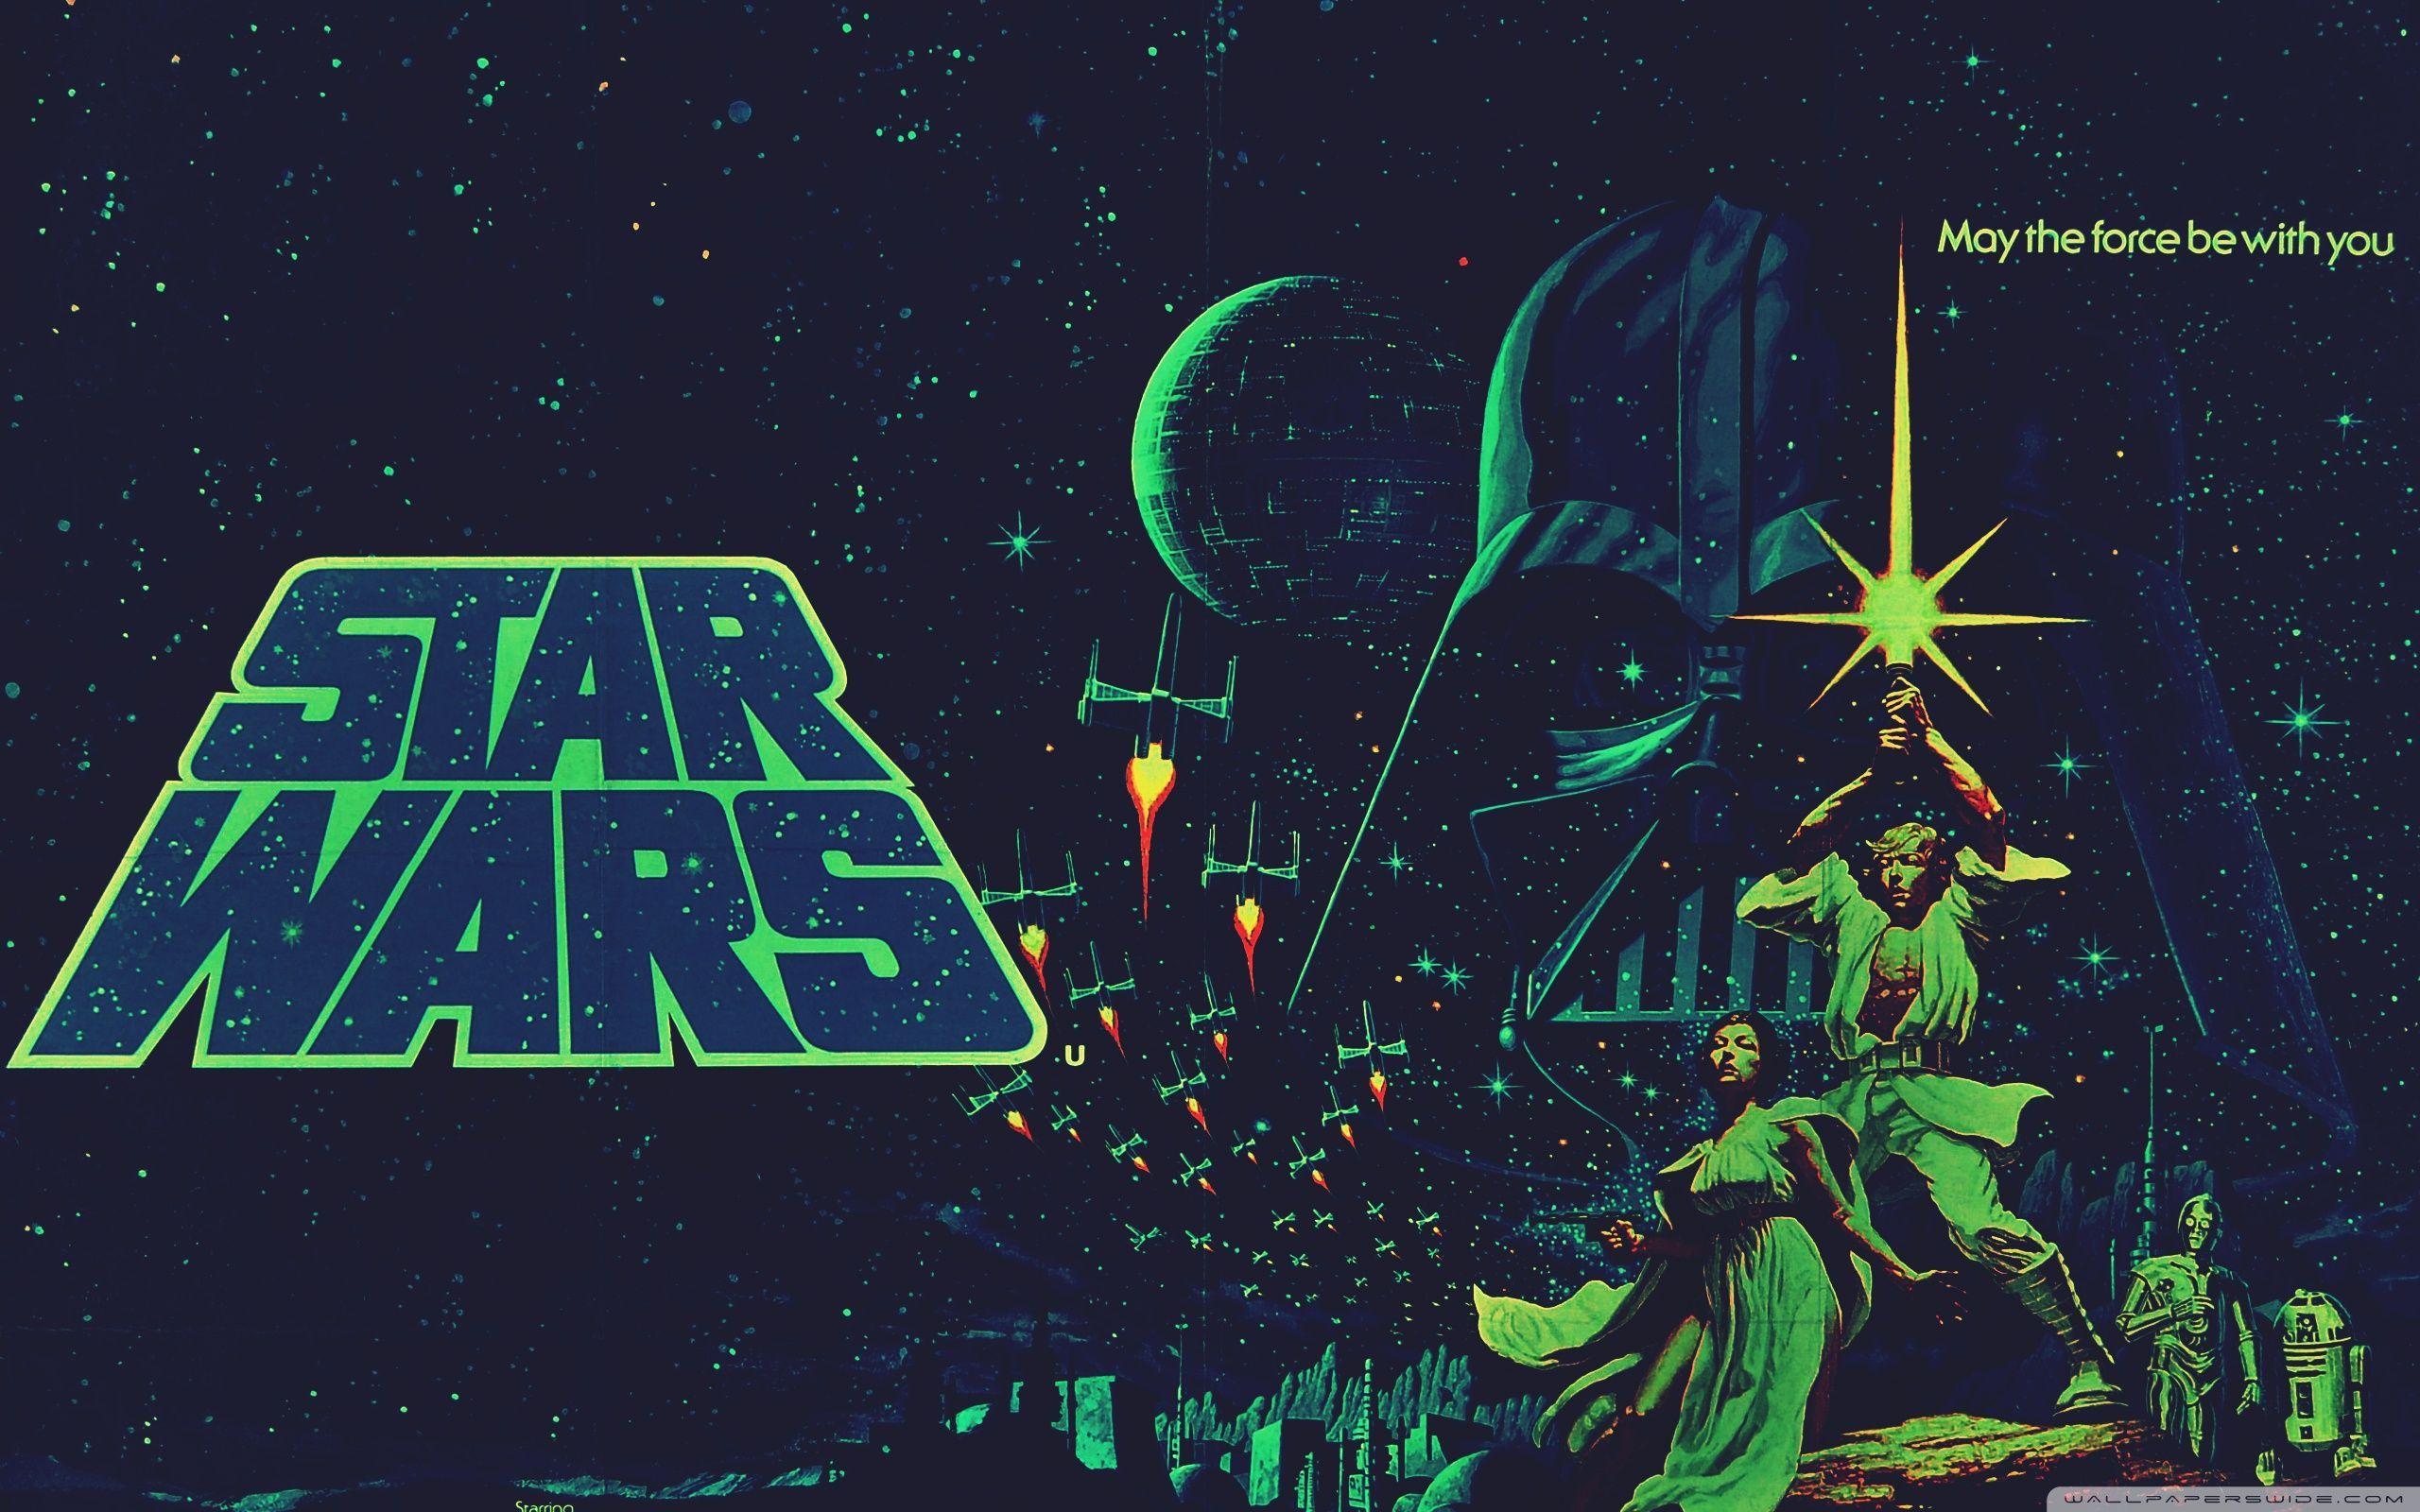 Movie Star Wars Poster HD Desktop Wallpaper High Definition Star